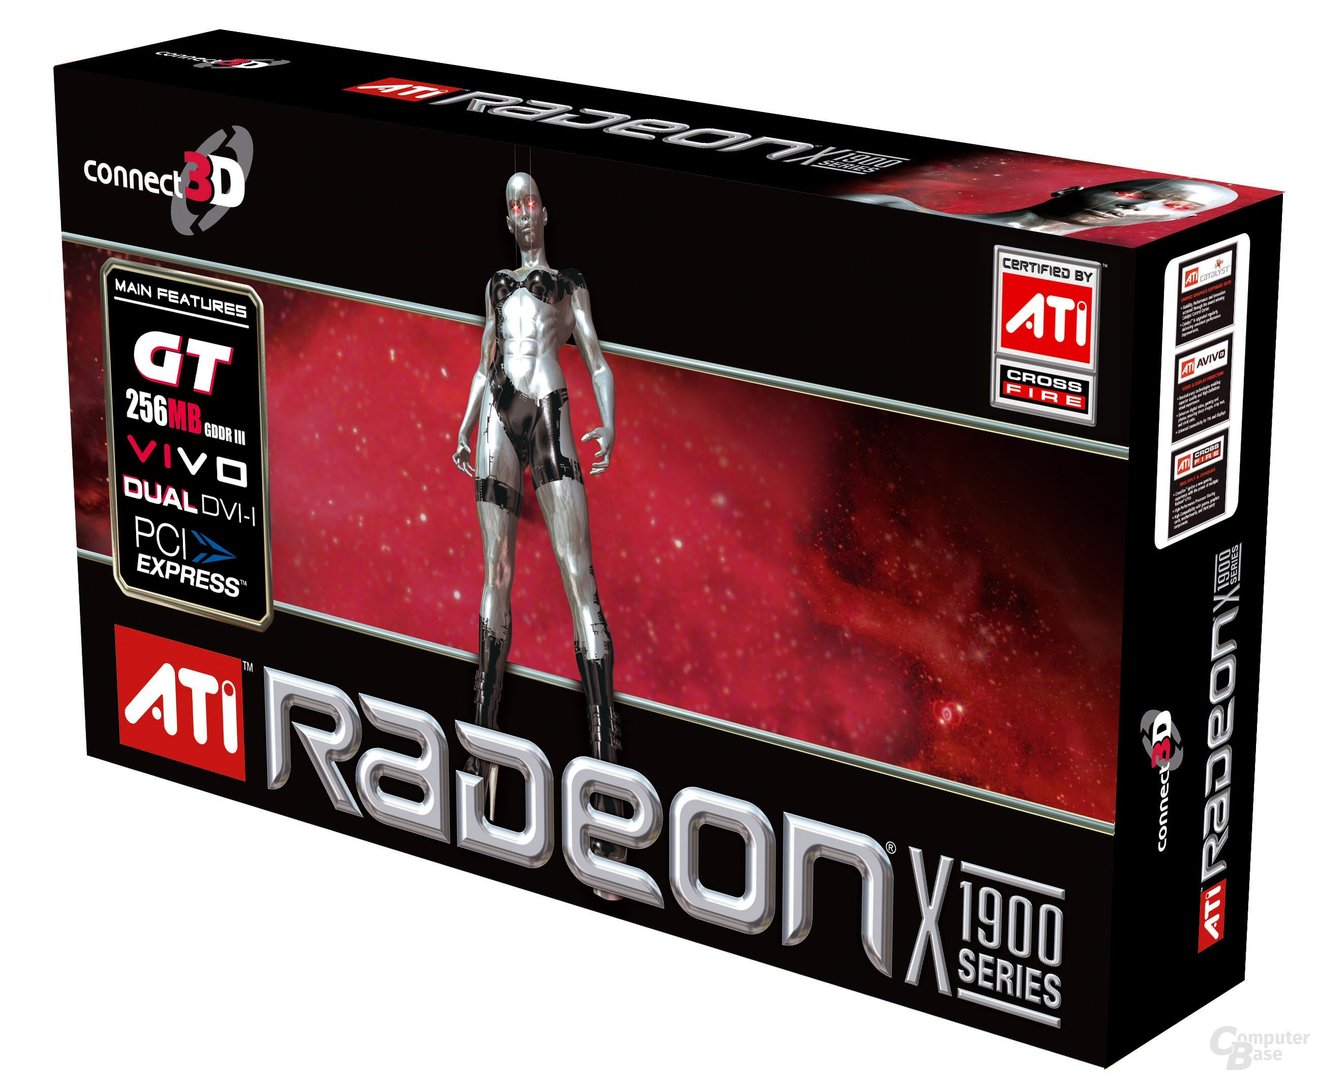 Connect3d Radeon X1900 GT